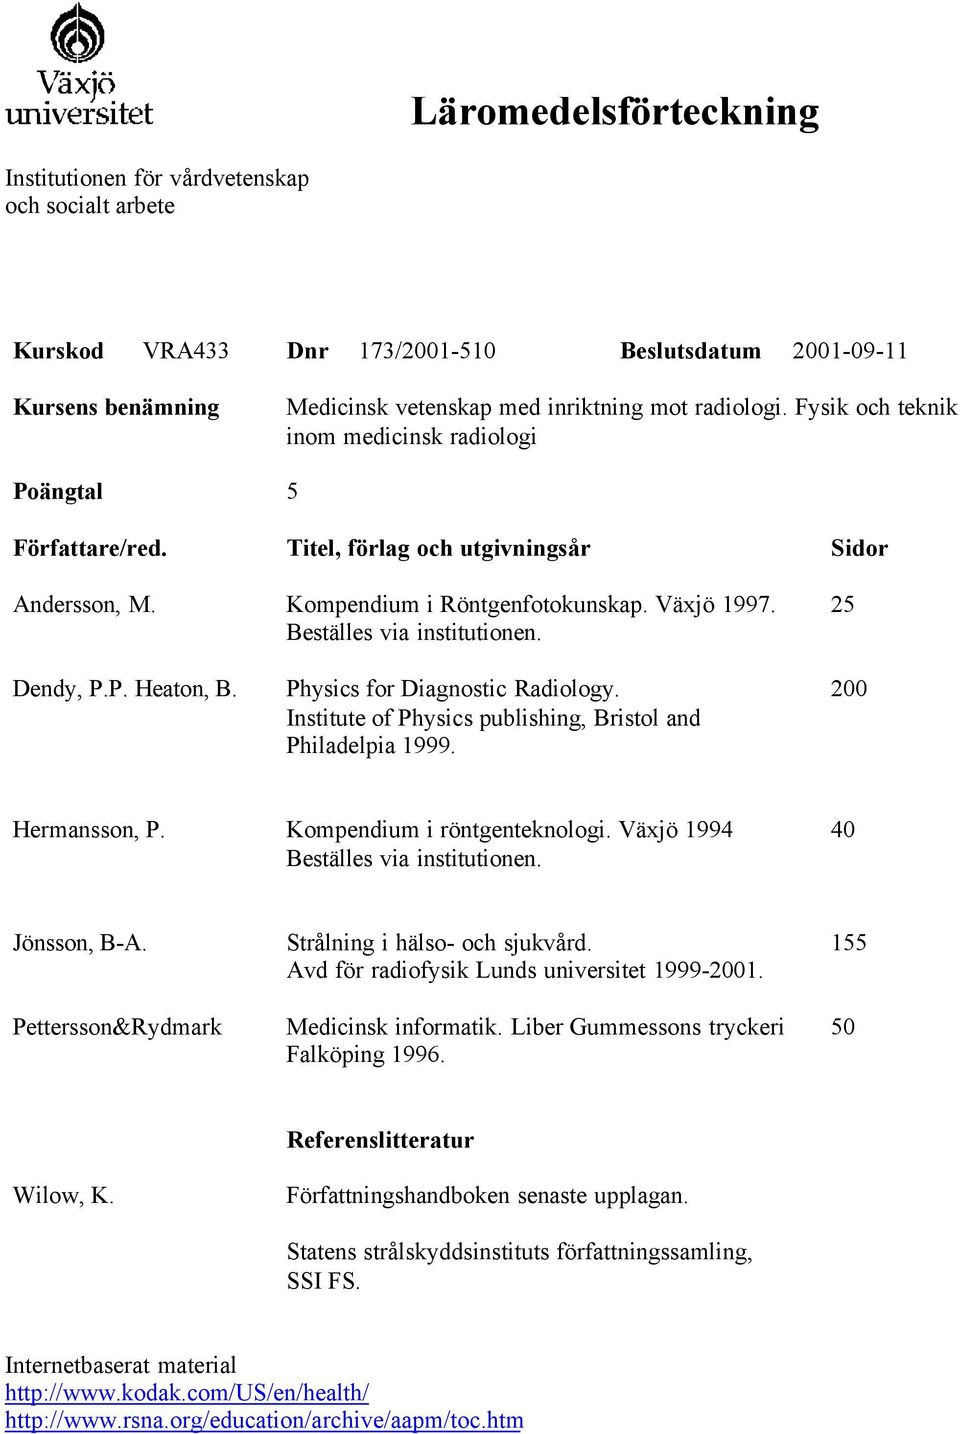 Physics for Diagnostic Radiology. Institute of Physics publishing, Bristol and Philadelpia 1999. 200 Hermansson, P. Kompendium i röntgenteknologi. Växjö 1994 40 Jönsson, B-A.